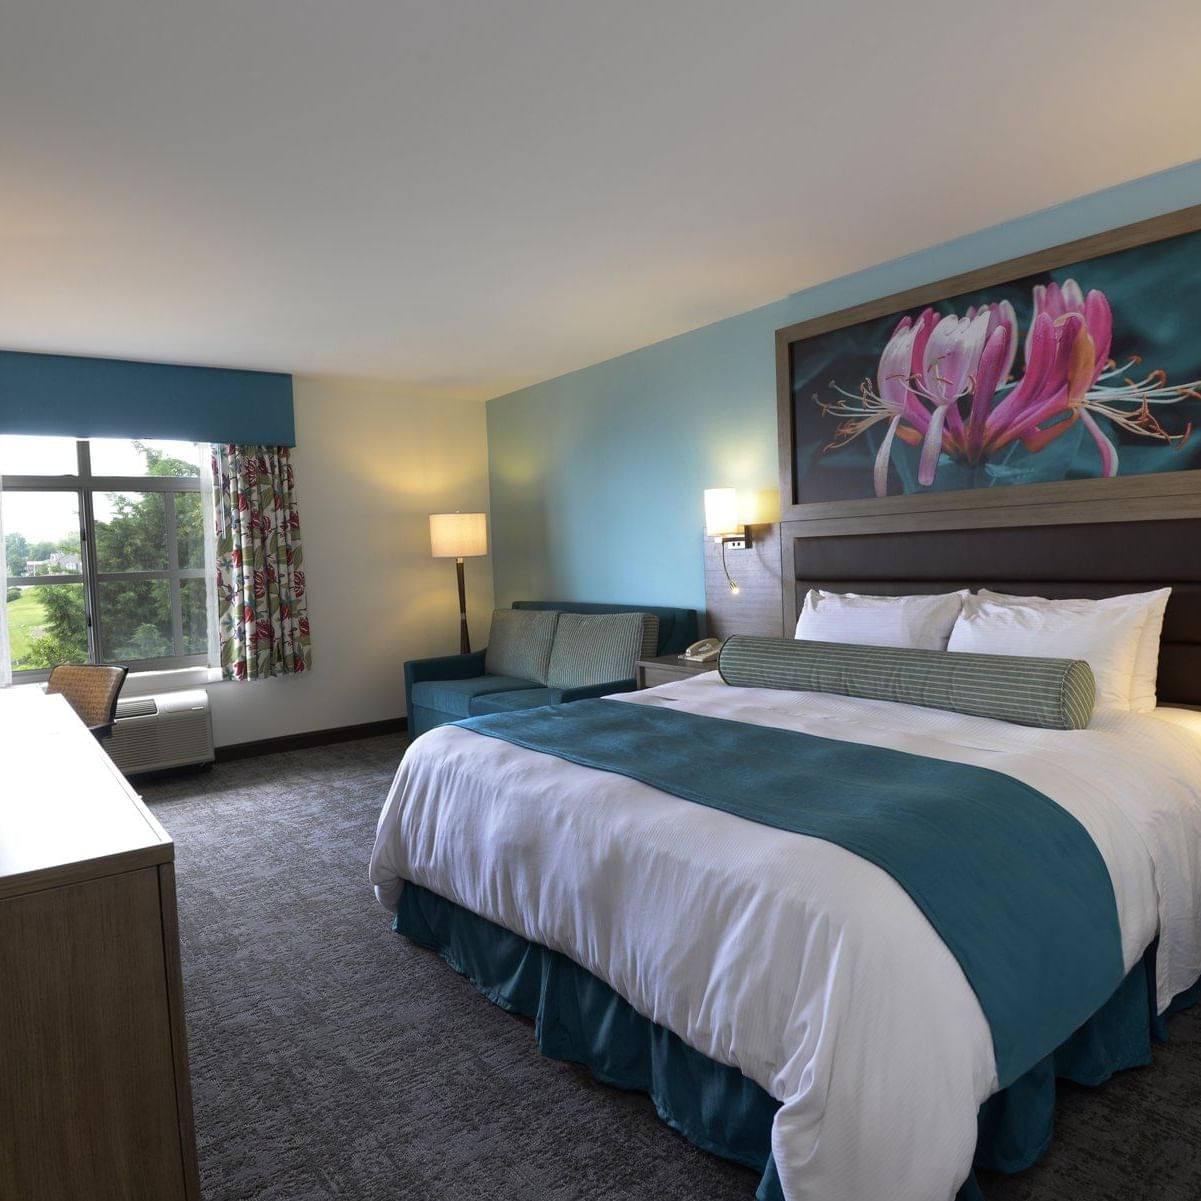 Hotel Rooms in Chesapeake Beach MD